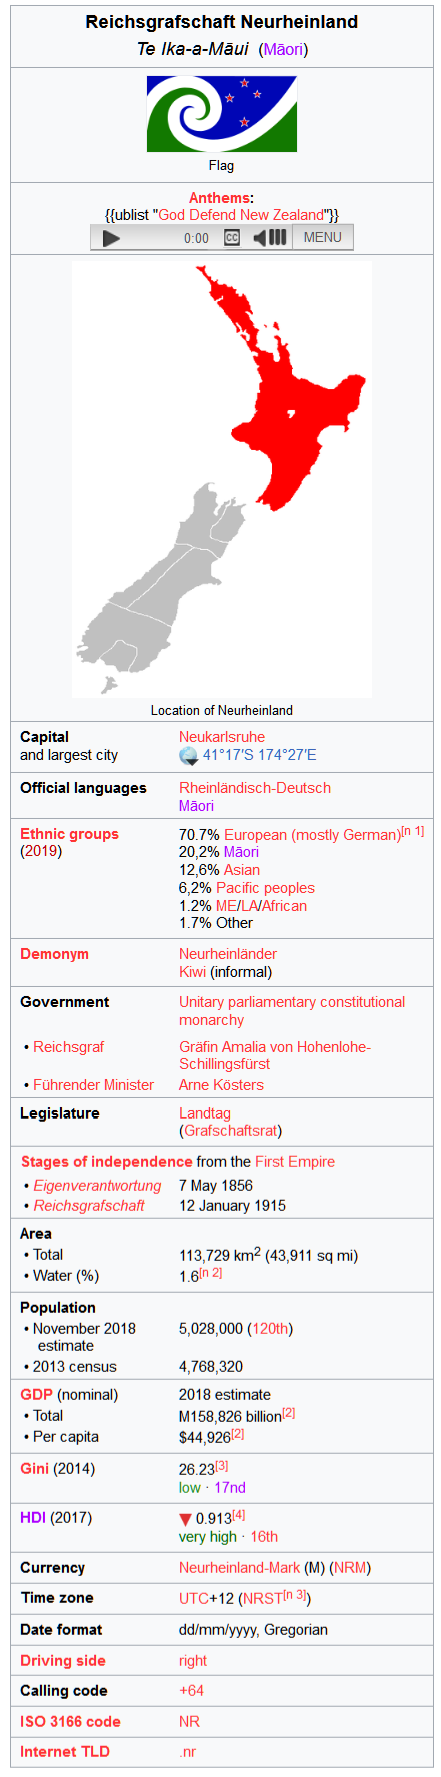 Reichsgrafschaft Neurheinland.png